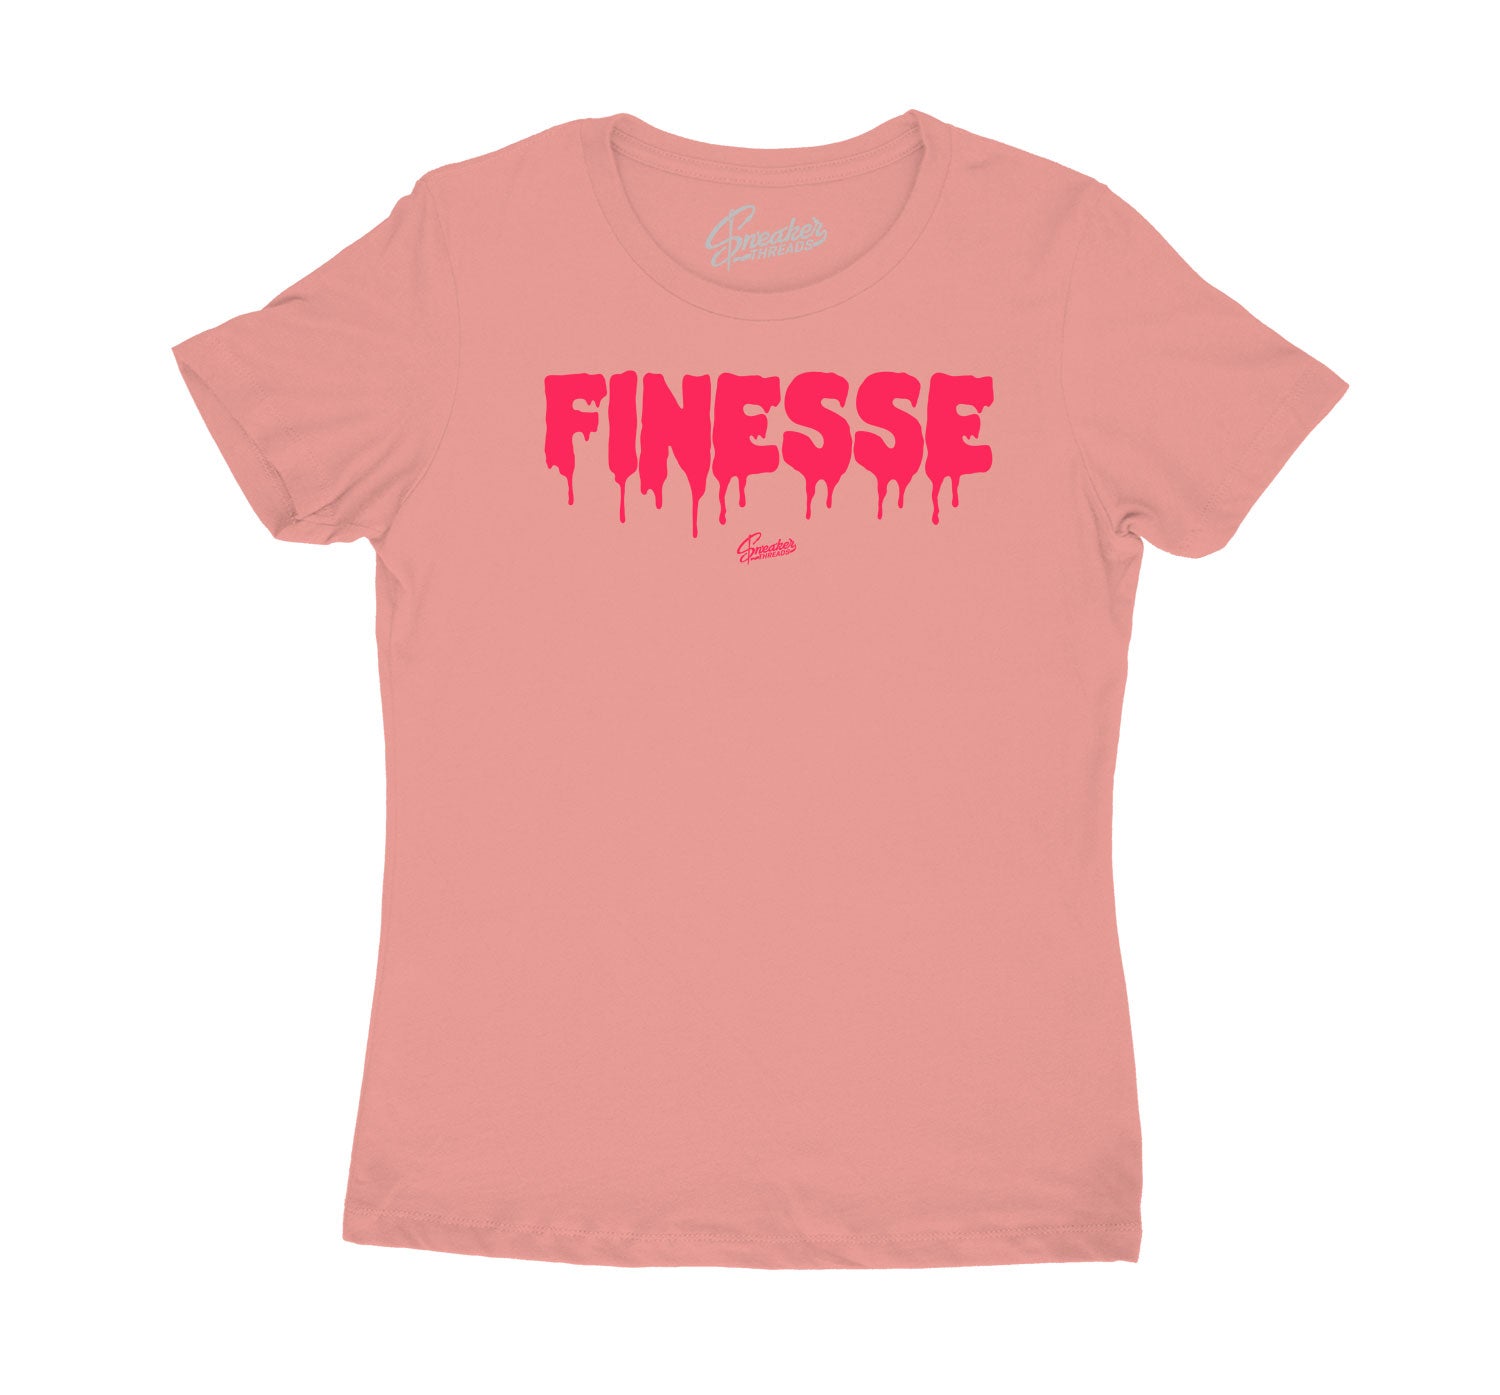 Womens Rust Pink Shirt - Finesse - Pink